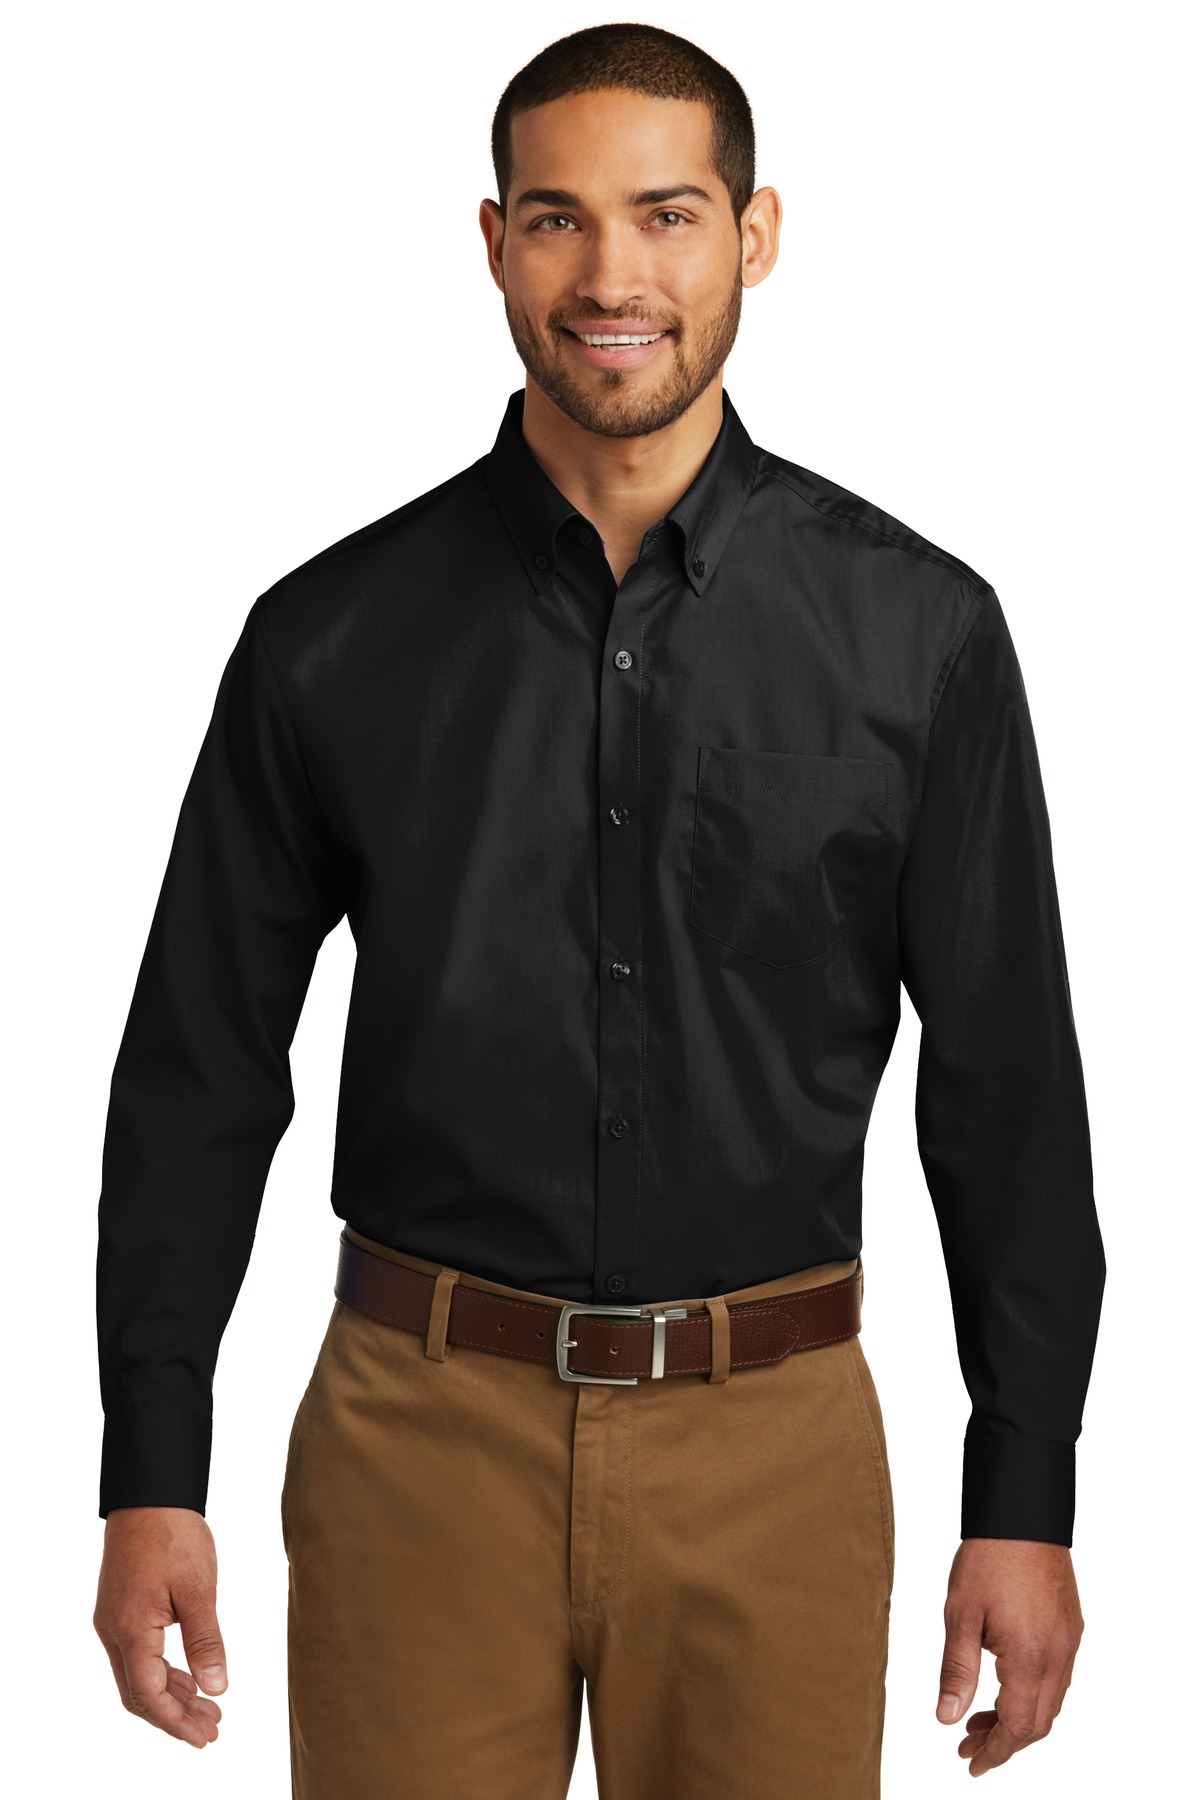 Port Authority Hospitality Tall Woven Shirts ® Tall Long Sleeve Carefree Poplin Shirt.-Port Authority